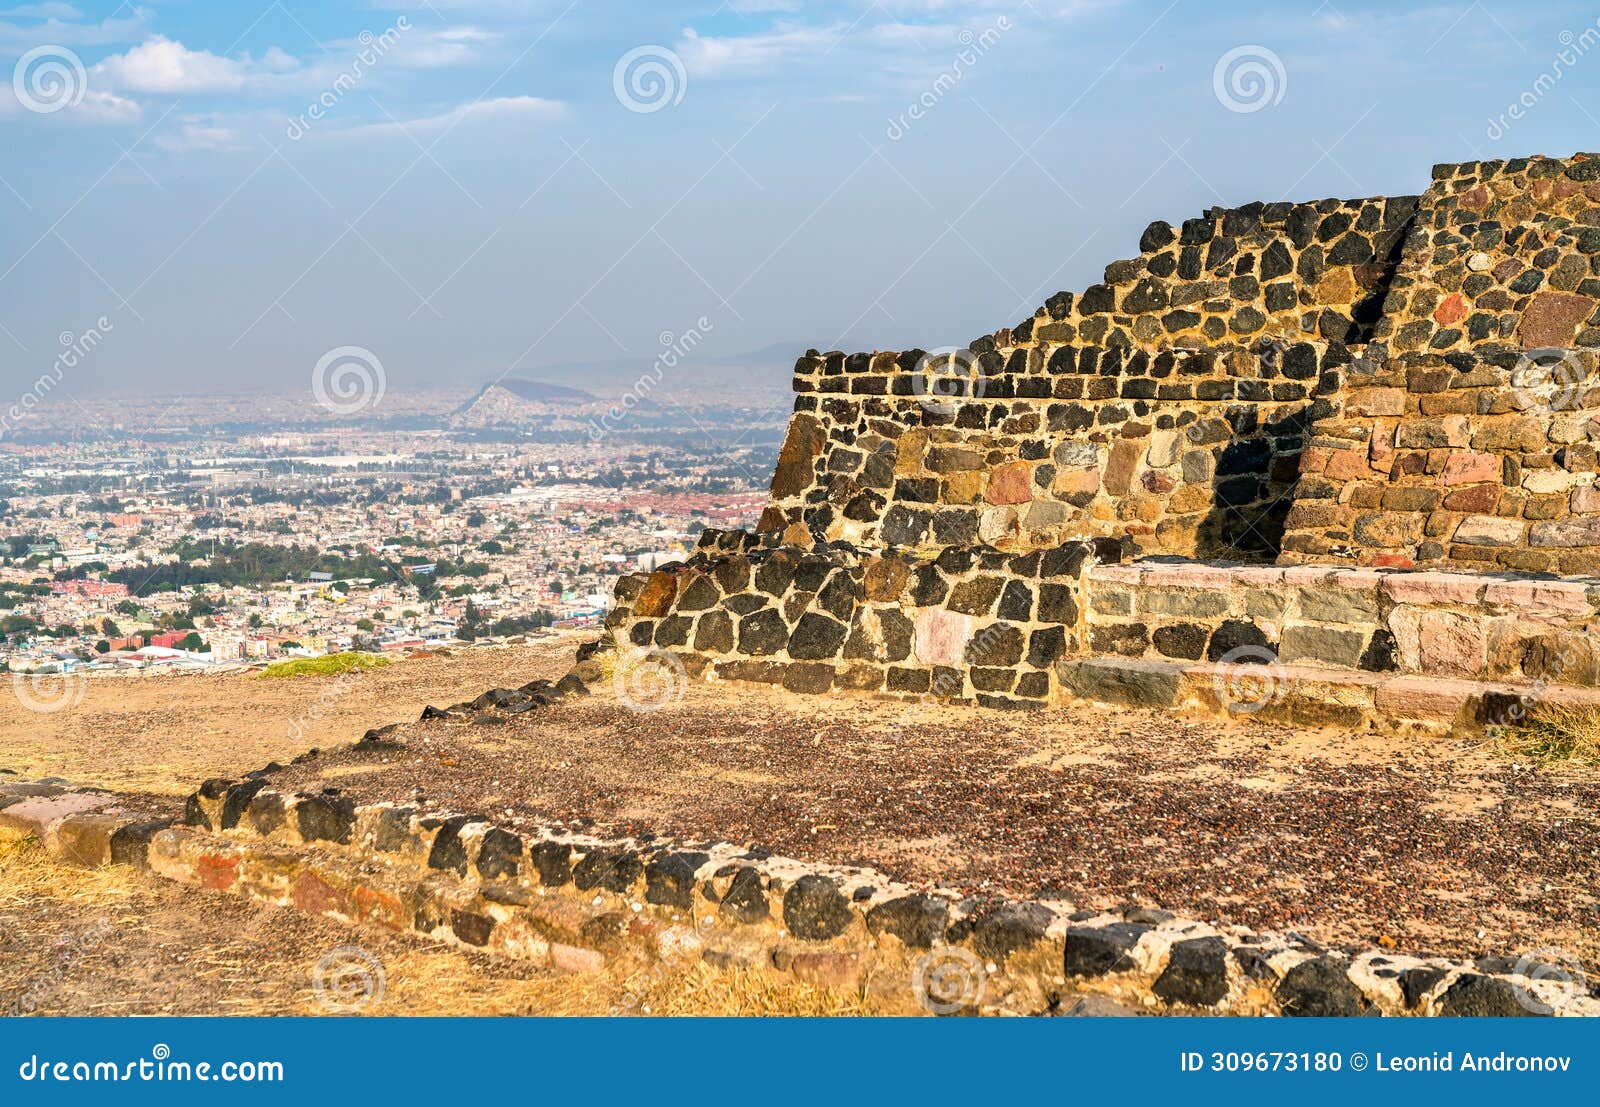 cerro de la estrella archaeological site in iztapalapa, mexico city